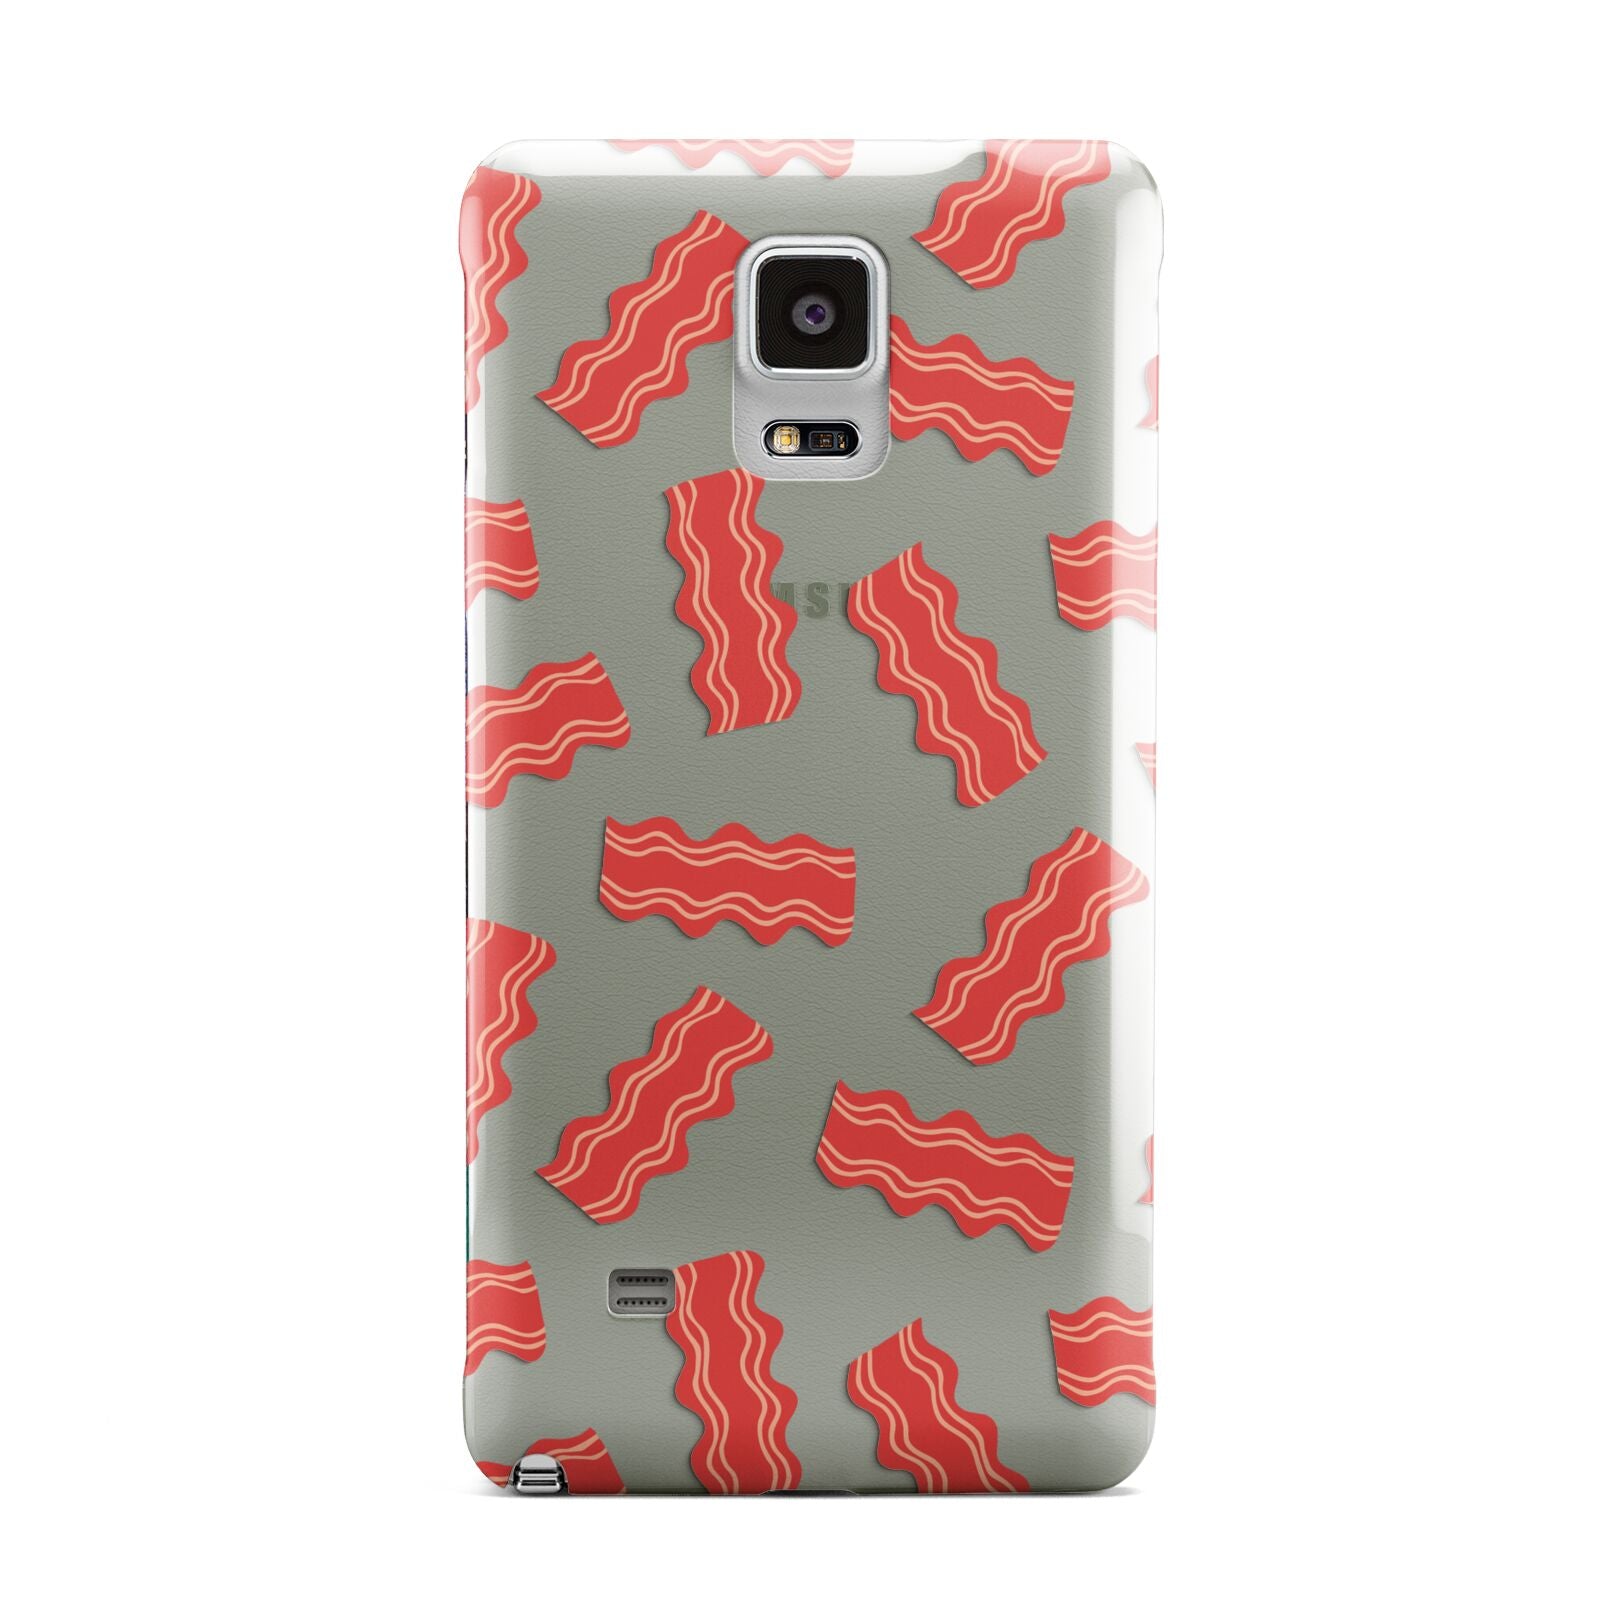 Bacon Samsung Galaxy Note 4 Case